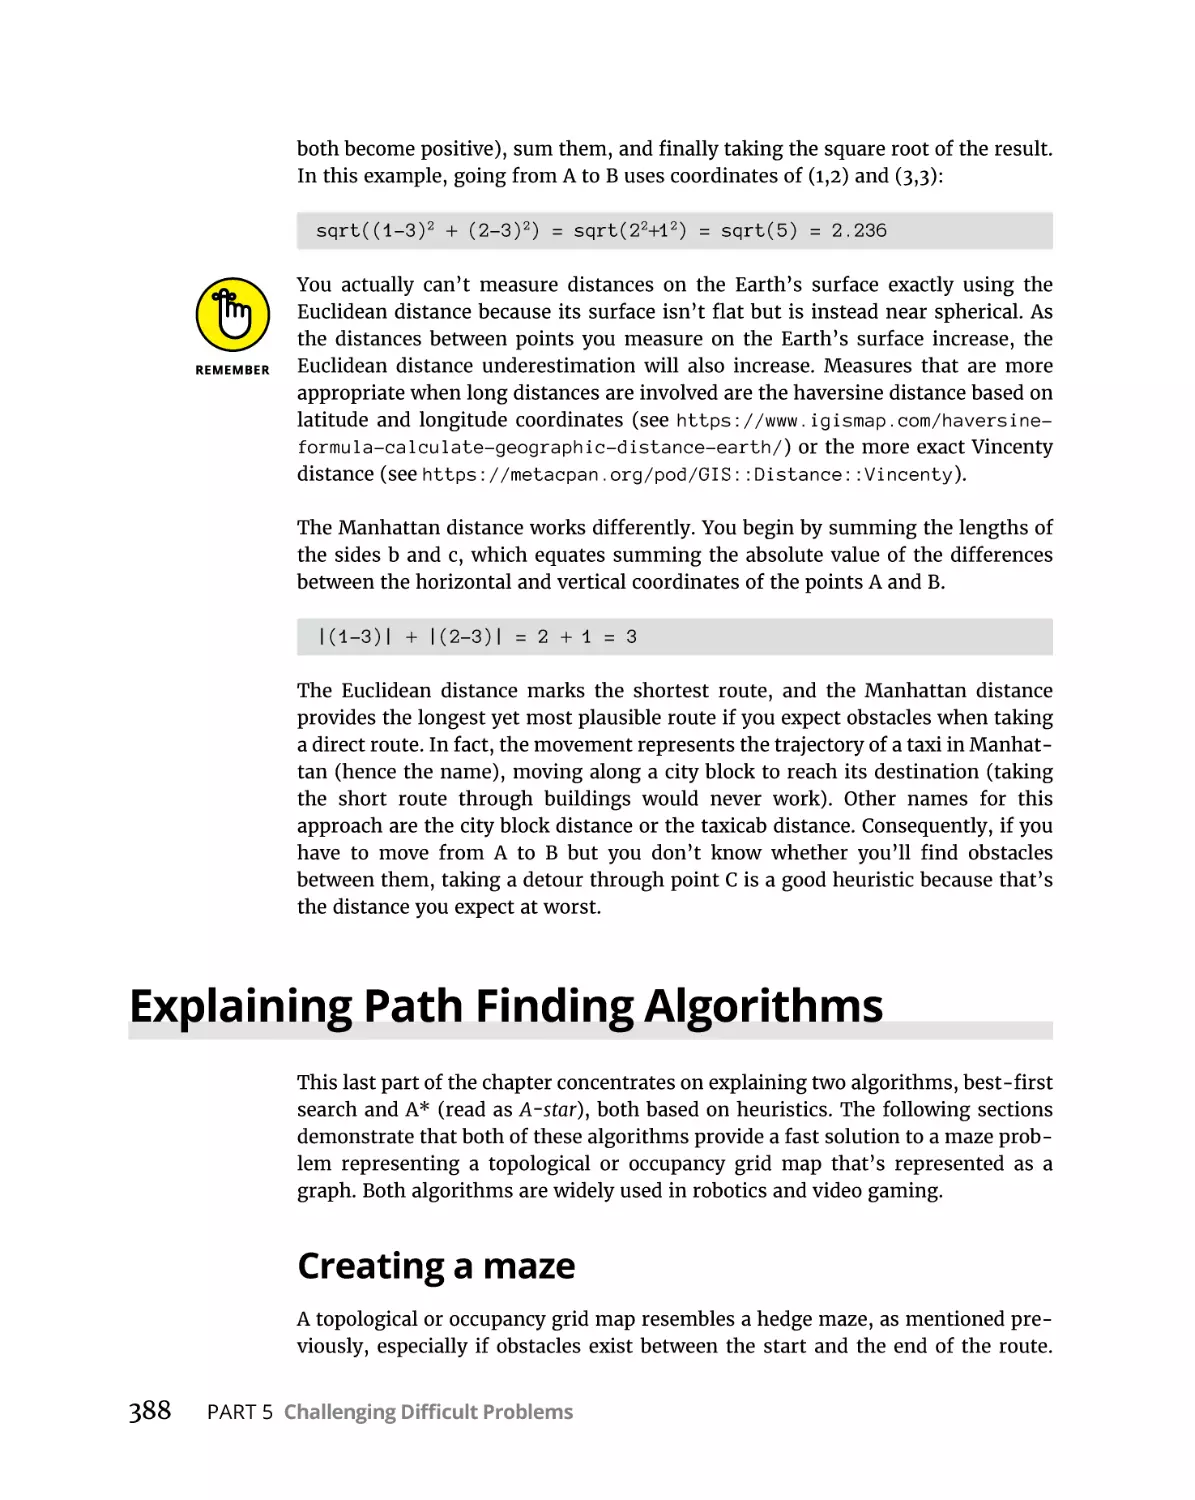 Explaining Path Finding Algorithms
Creating a maze